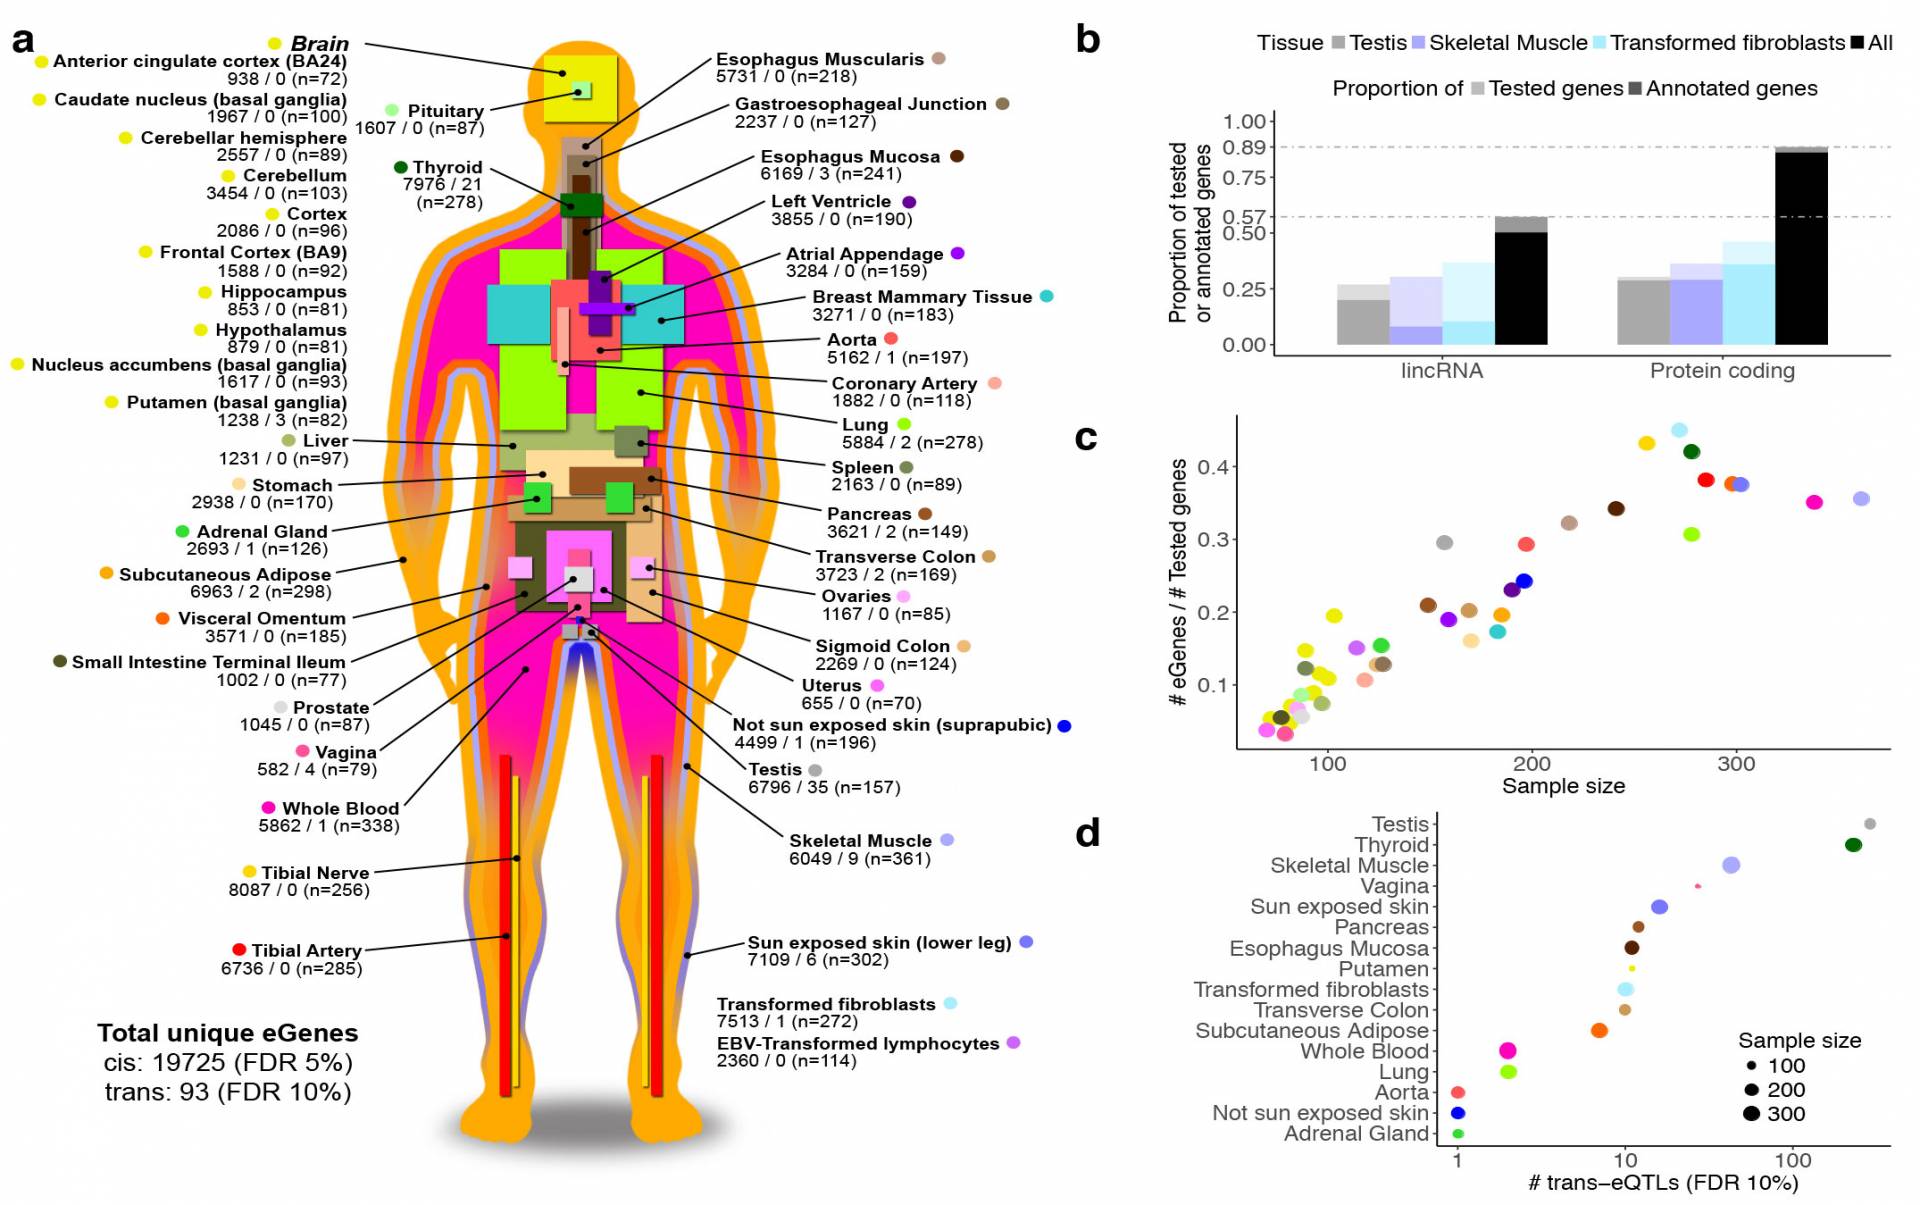 Illustration linking genes to tissue types